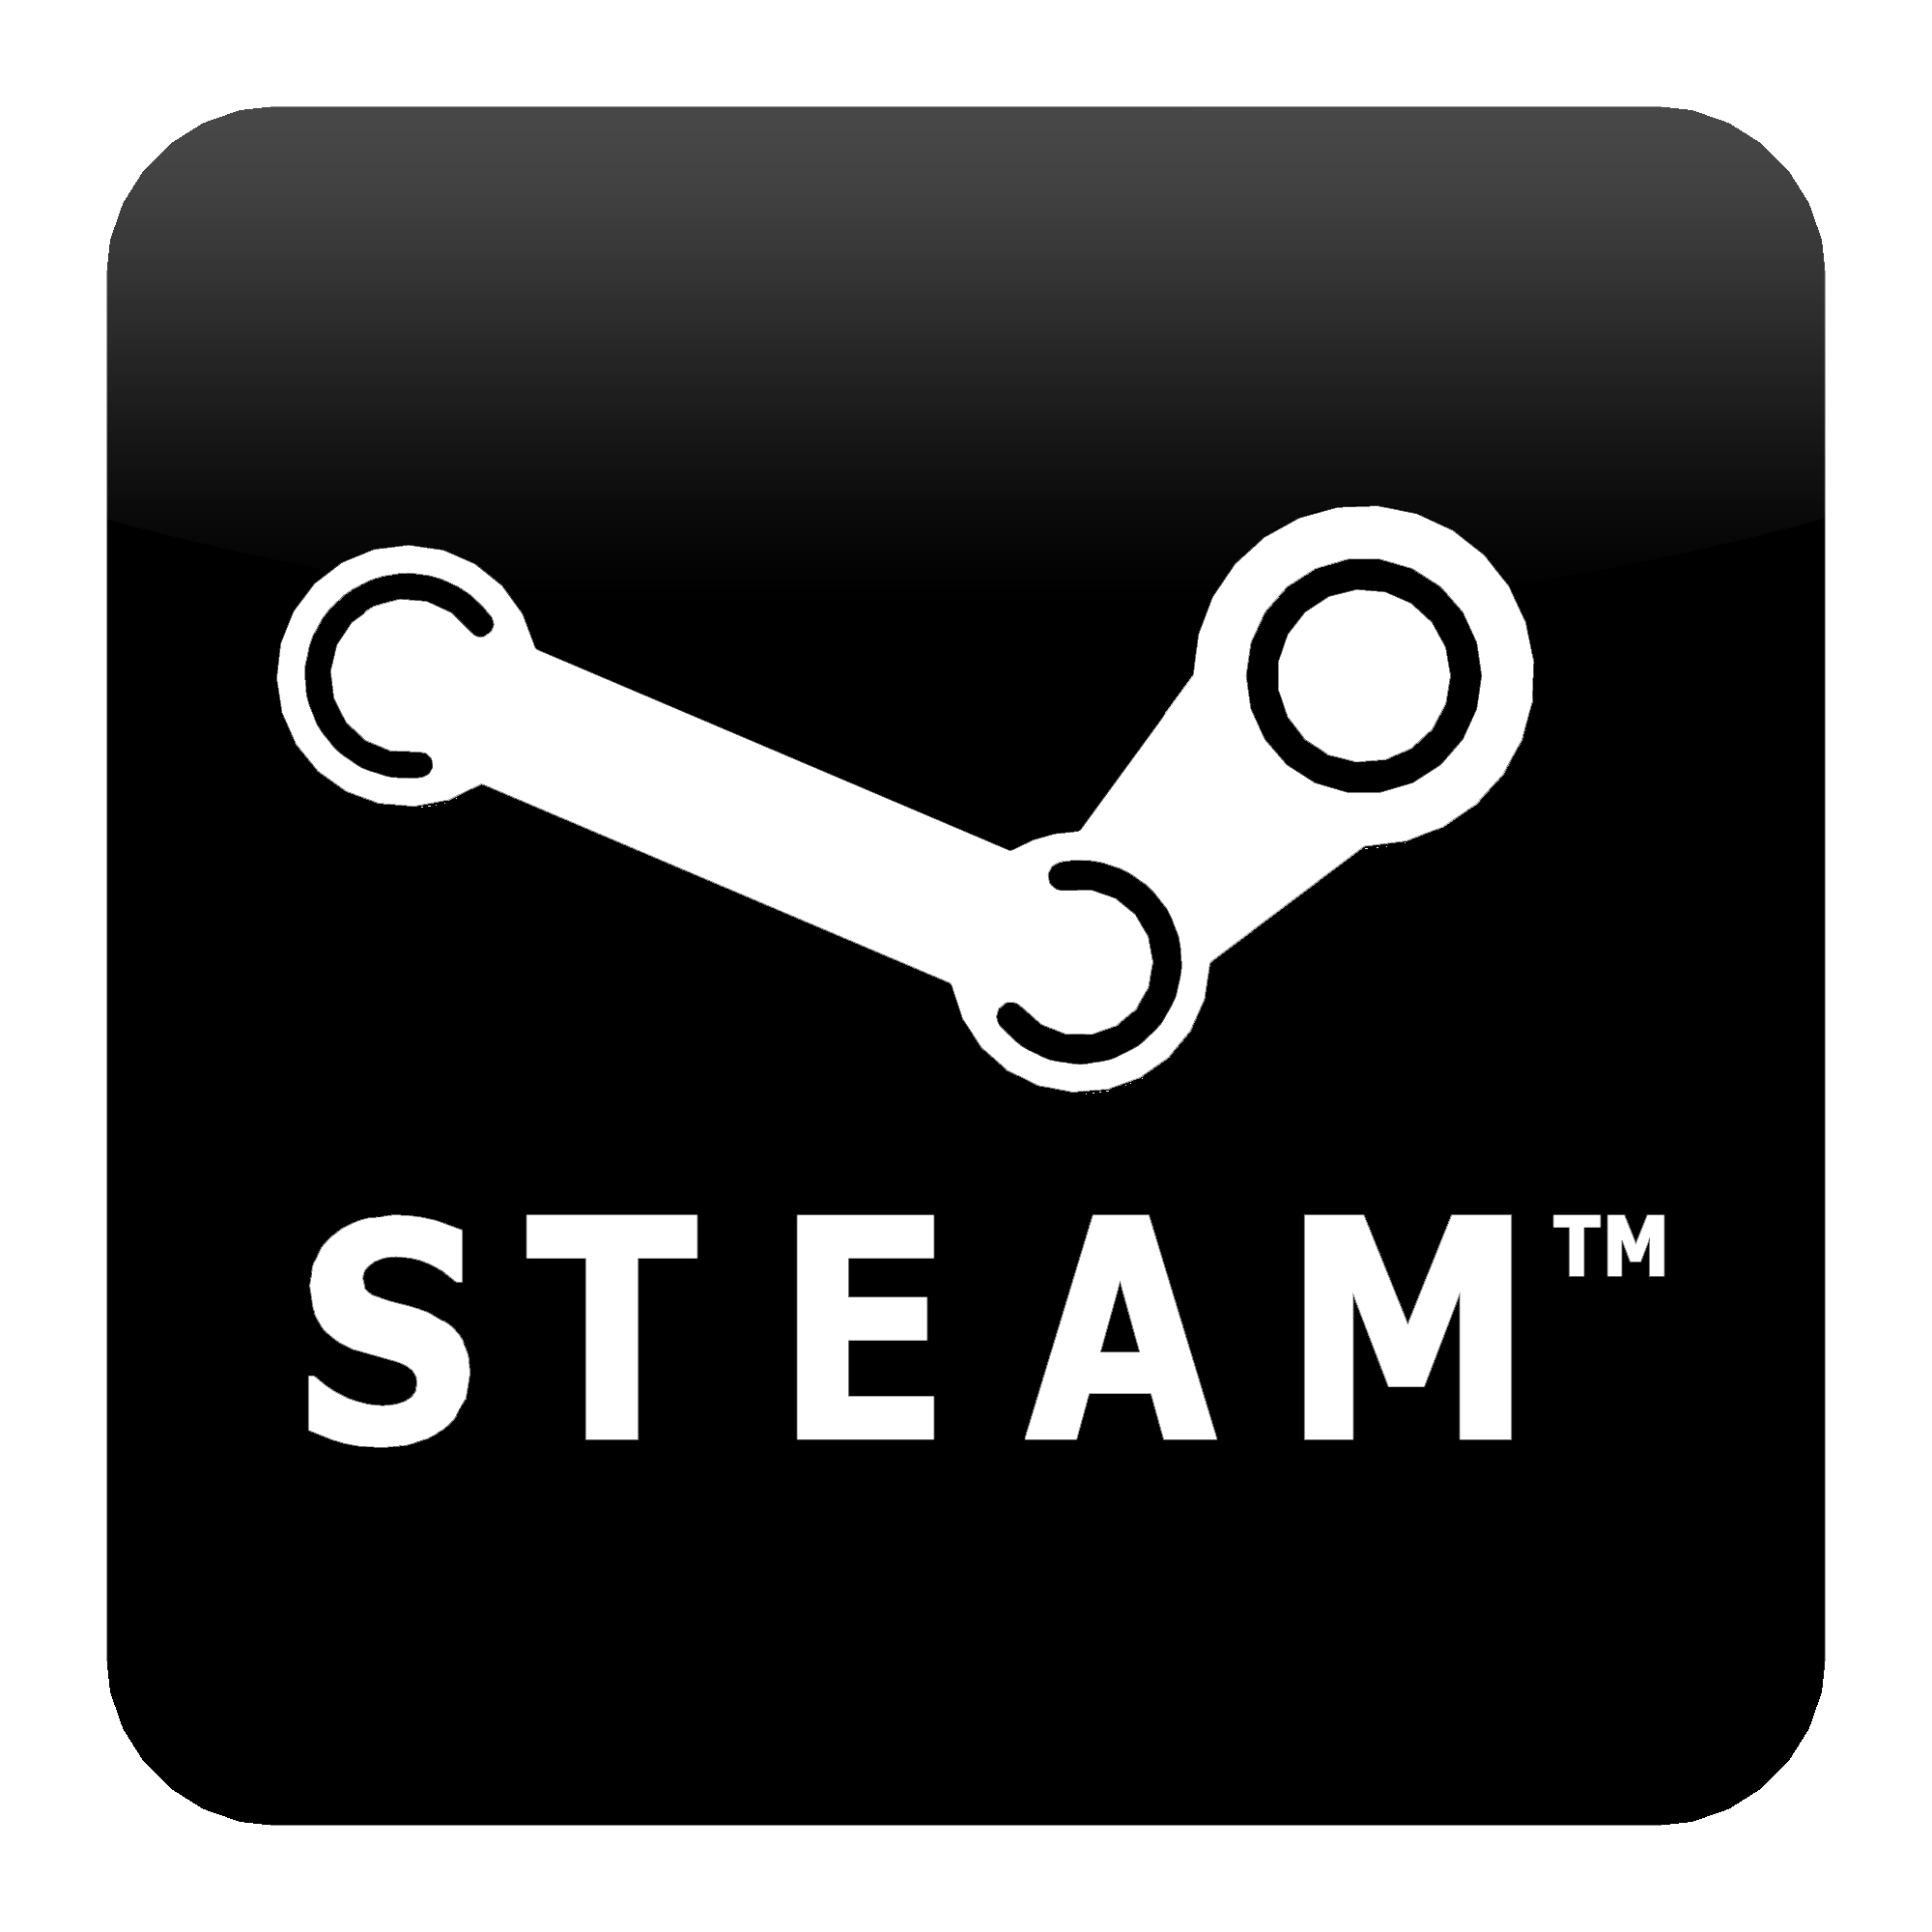 Steam Logo - Steam Logo transparent PNG - StickPNG